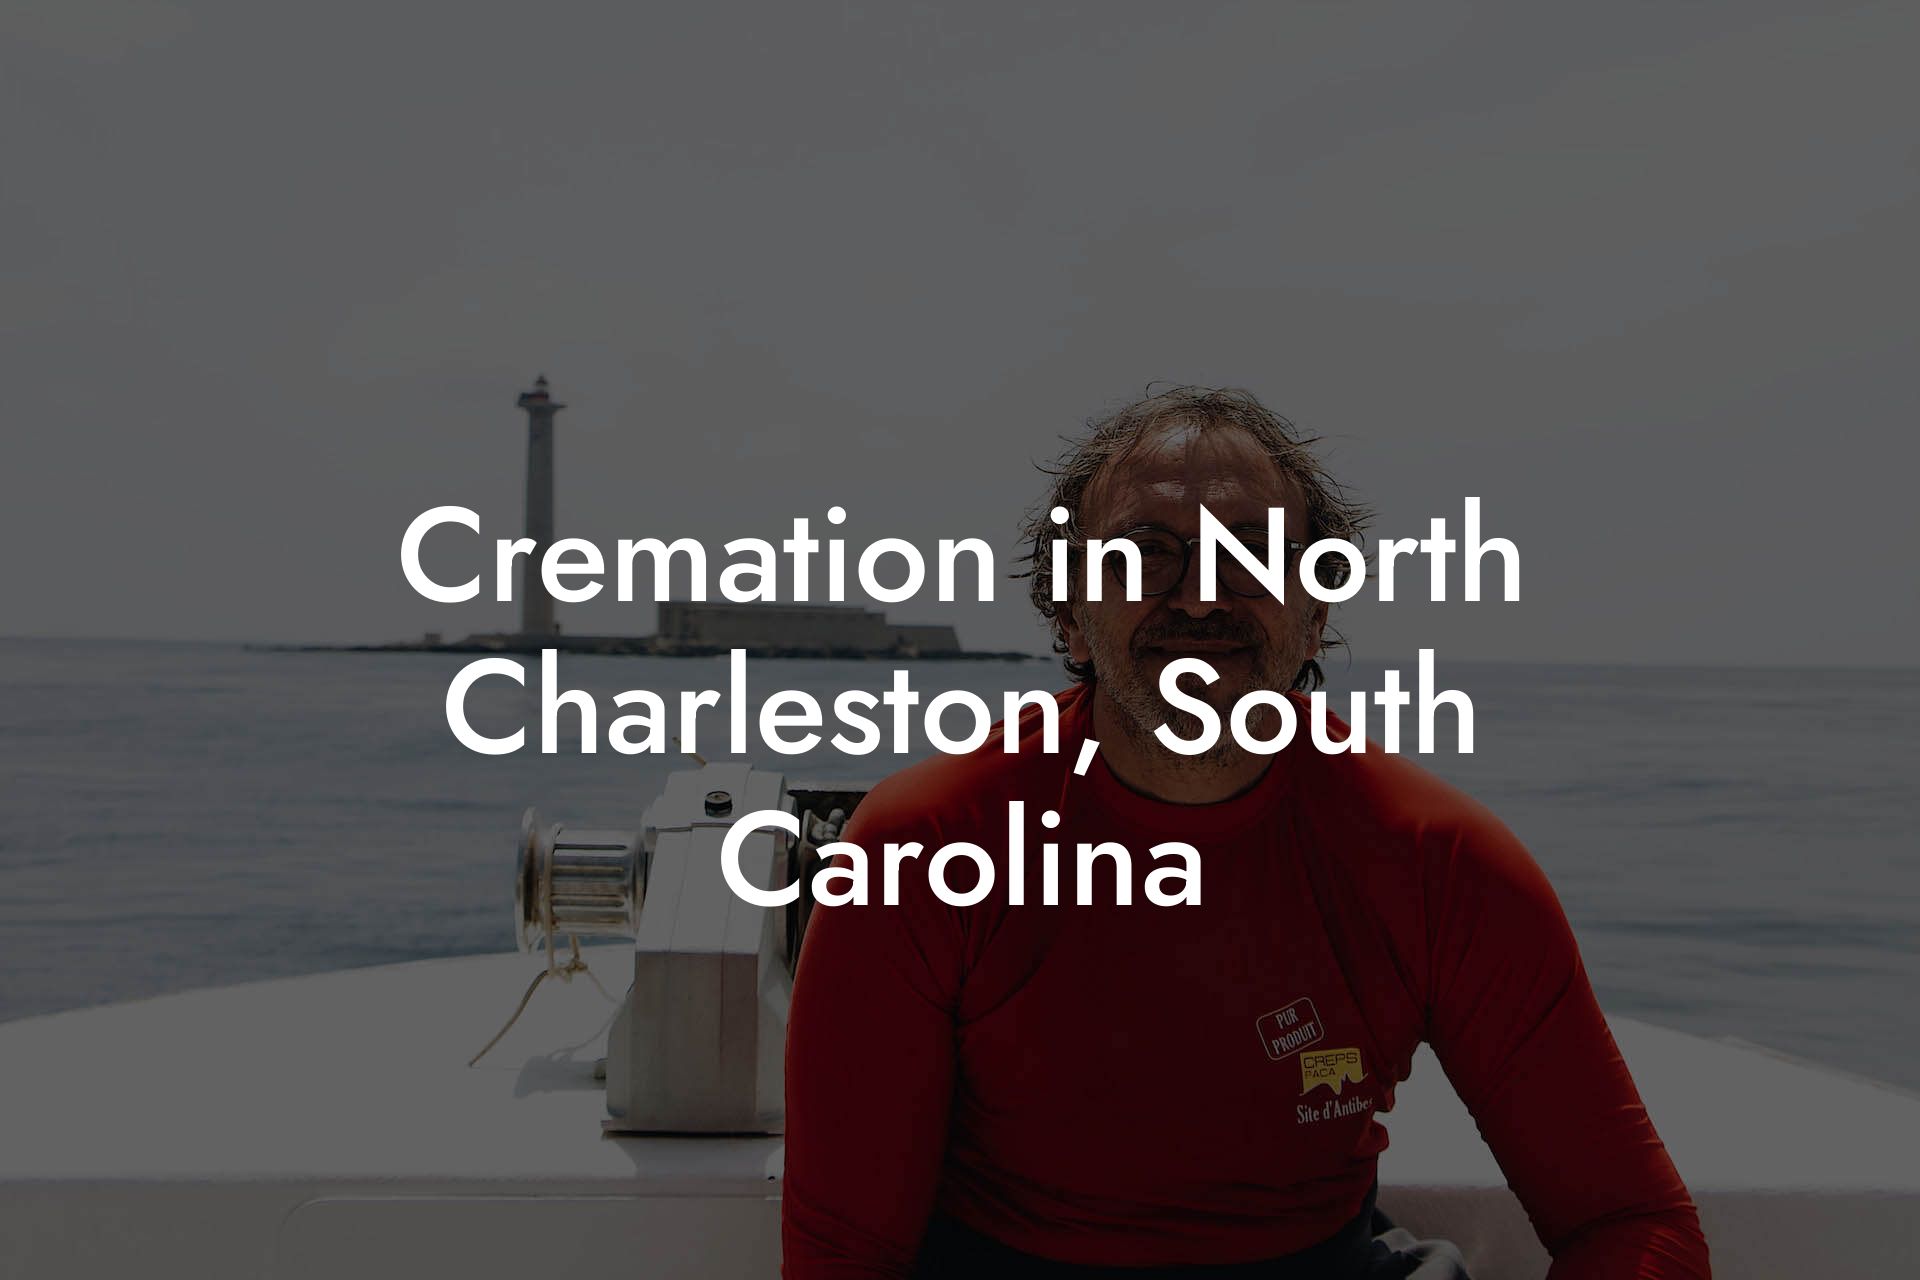 Cremation in North Charleston, South Carolina